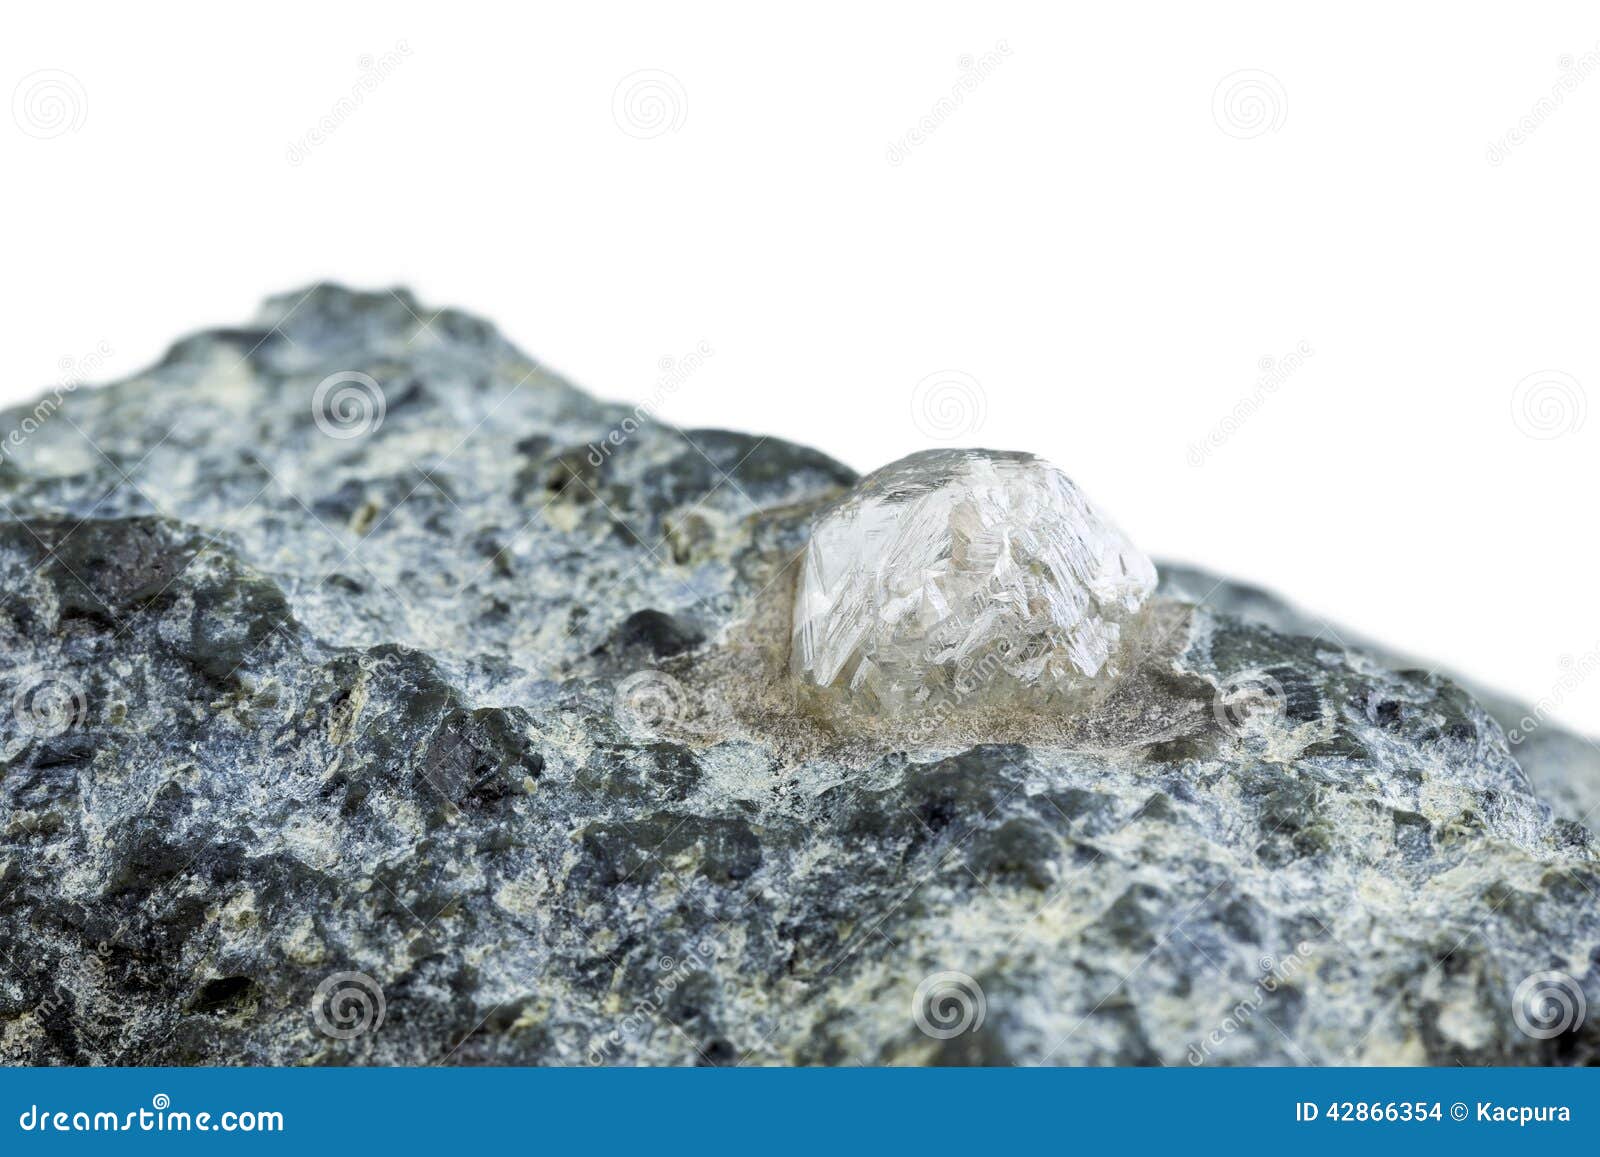 Rough Diamond stock photo. Image of luxury, rough, isolated - 42866354